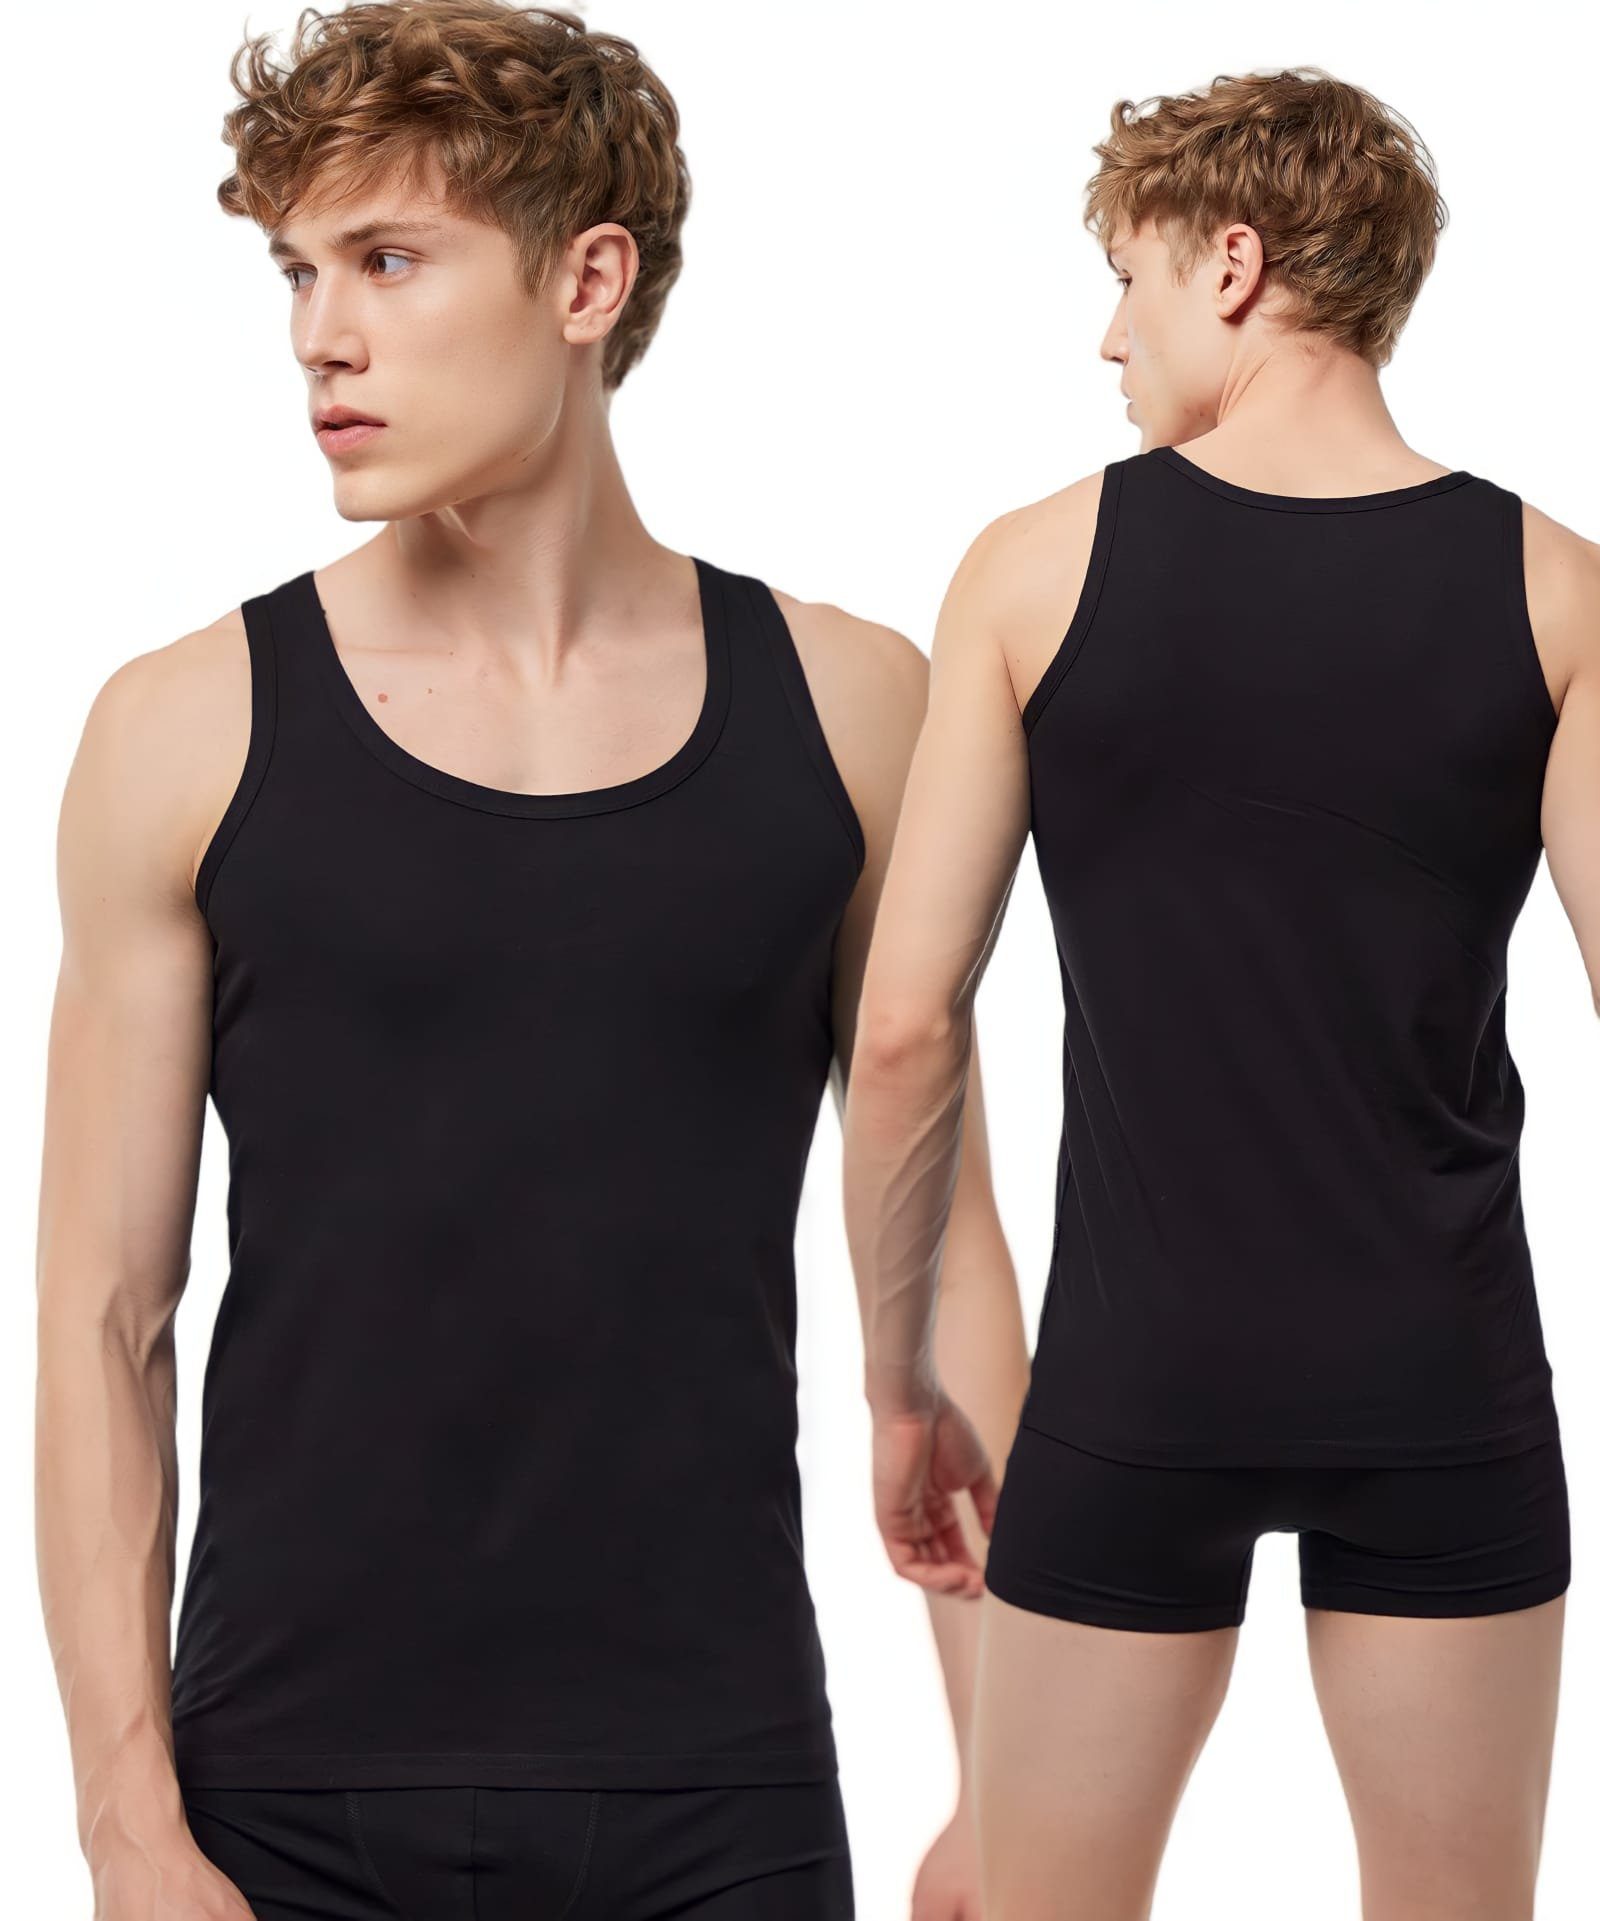 Tutku Elit Unterhemd 3er-5er Pack Herren Modal Tops - schwarze Unterhemden (3-St., Merpack-Auswahl) Atmungsaktiv, formstabil & komfortabel